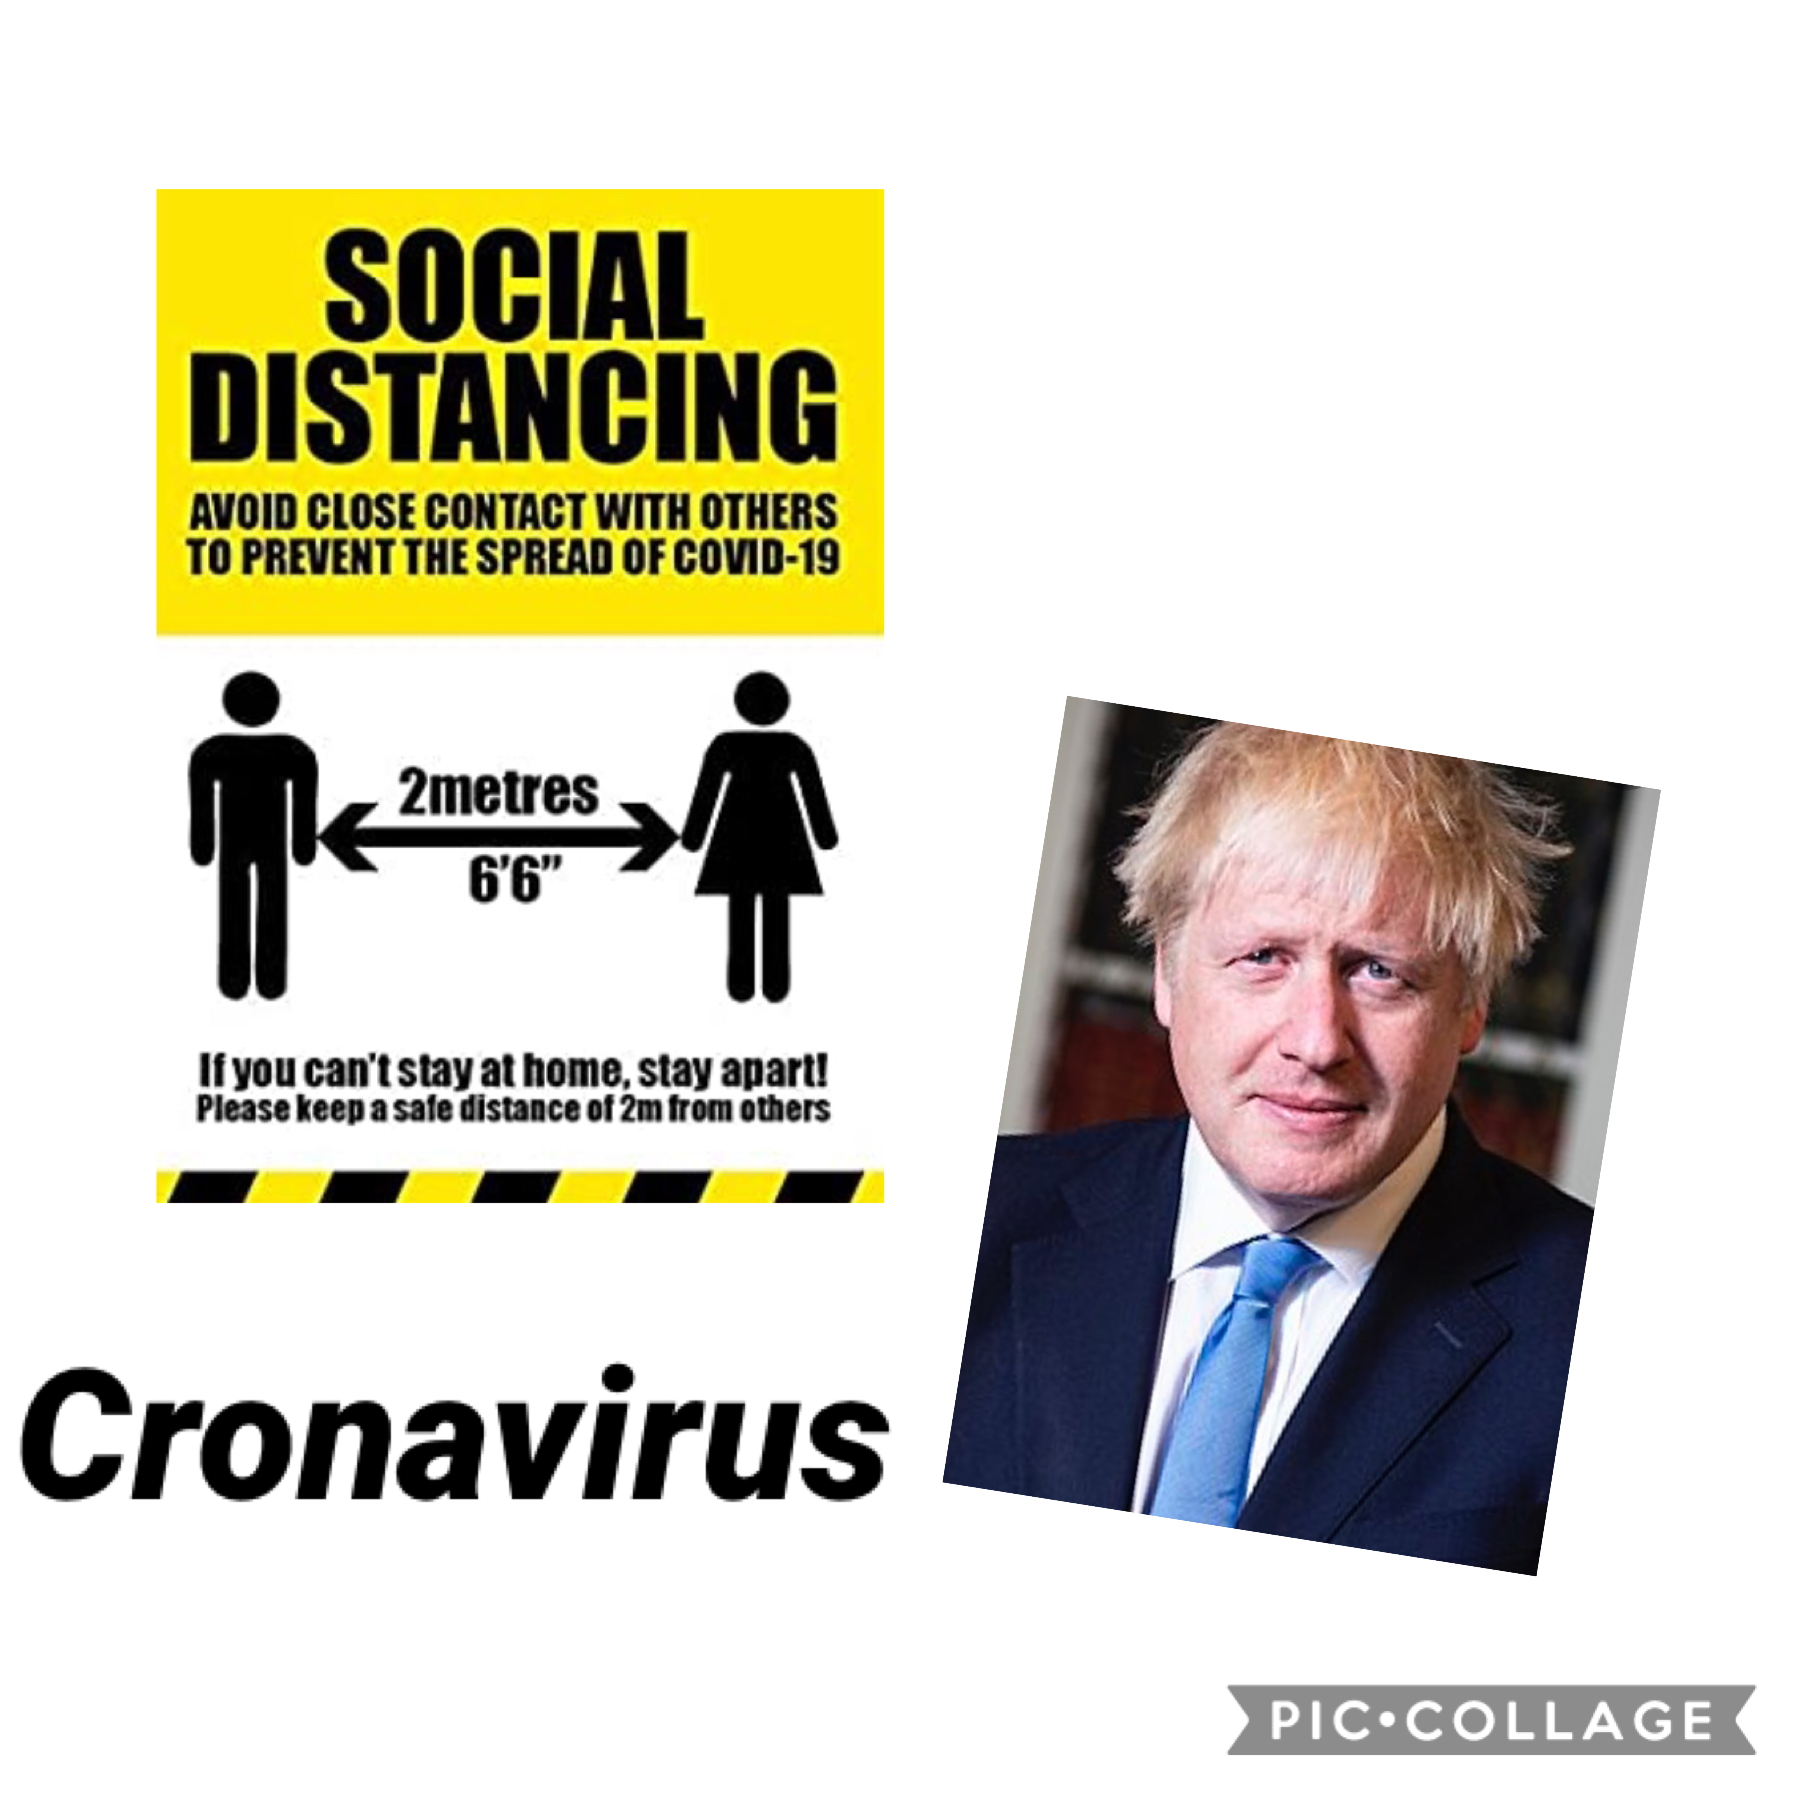 Cronavirus
